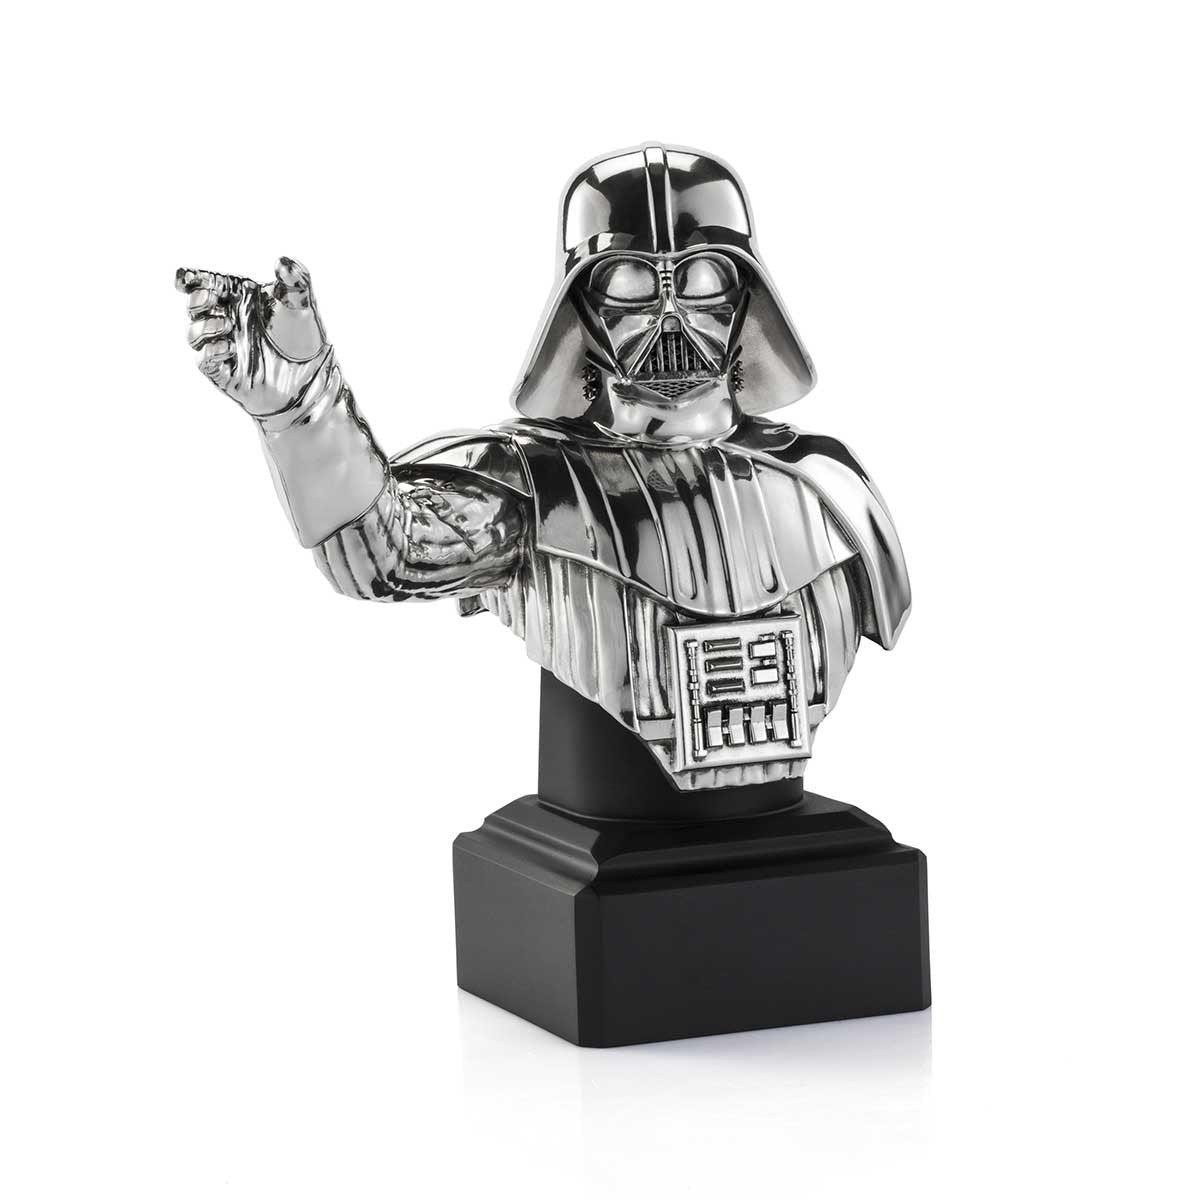 Star Wars Darth Vader Bust - Collectible Gift